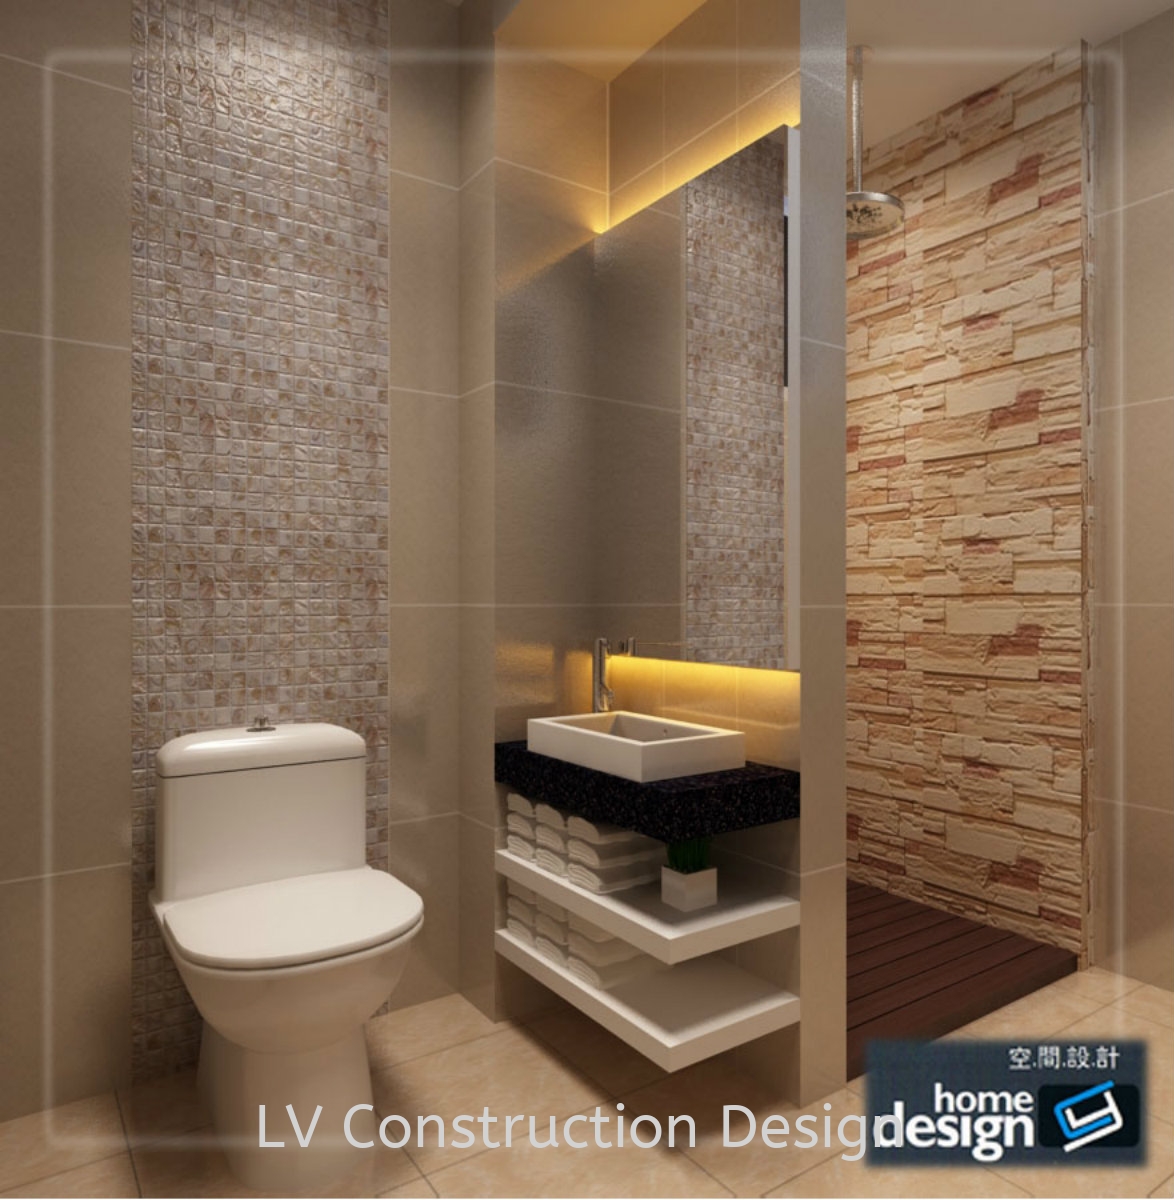 Bathroom Design Johor Bahru Jb Malaysia Design Lv Construction Design Sdn Bhd